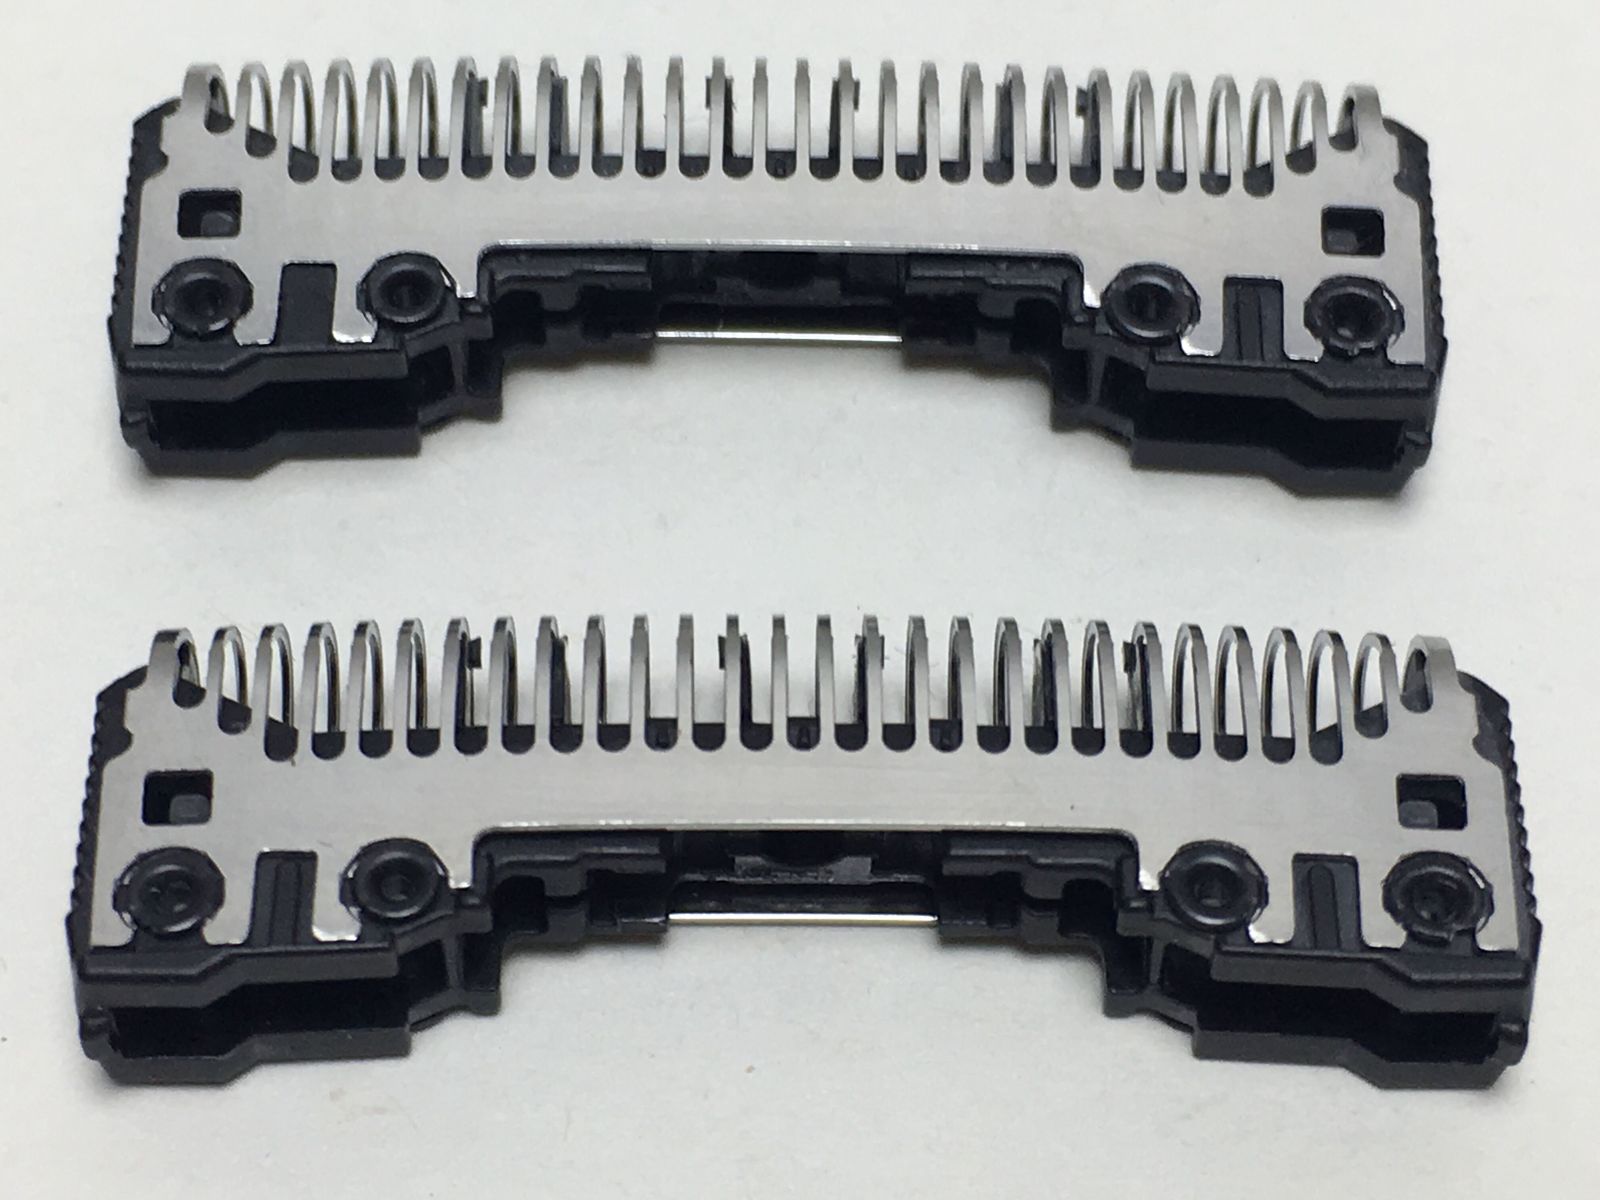 2x razor blades cutter for panasonic es-lt52 es-lt22 es-rt44 es-rt54 es-st25